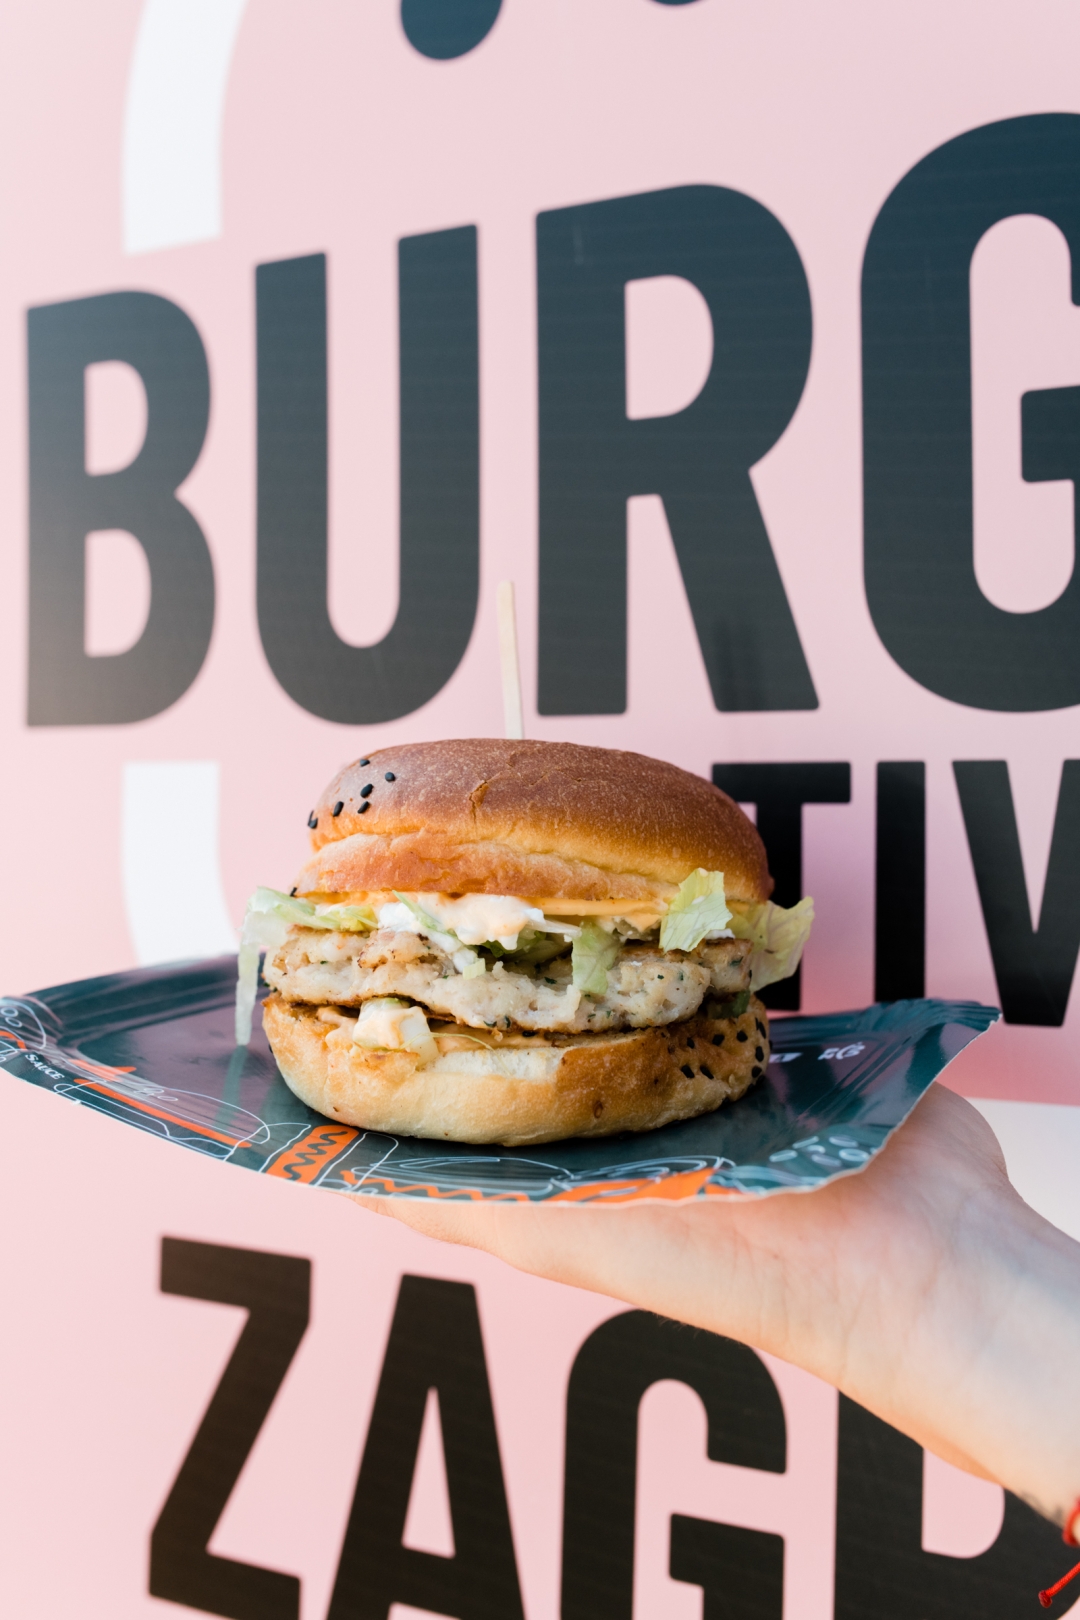 Picnic Mingle & Fun - burger od kozica